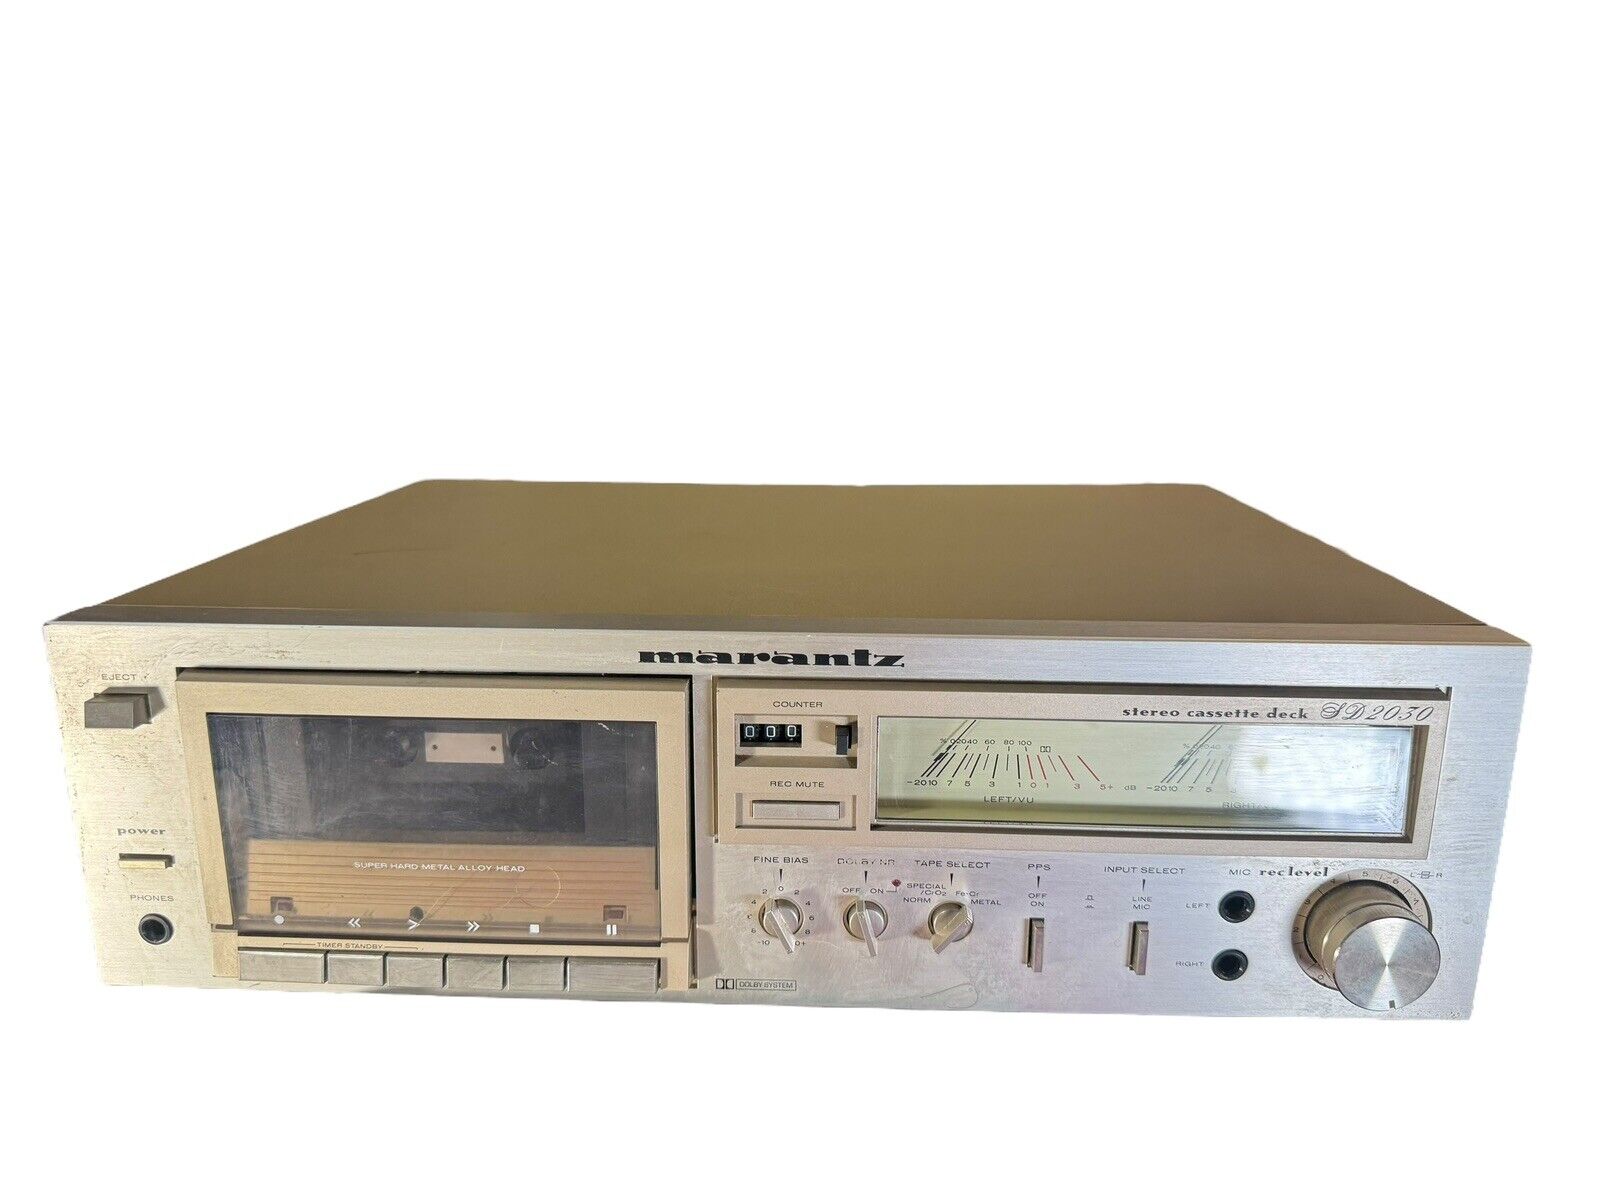 Vintage Marantz SD2030 Stereo Cassette Deck (needs belt replacement)